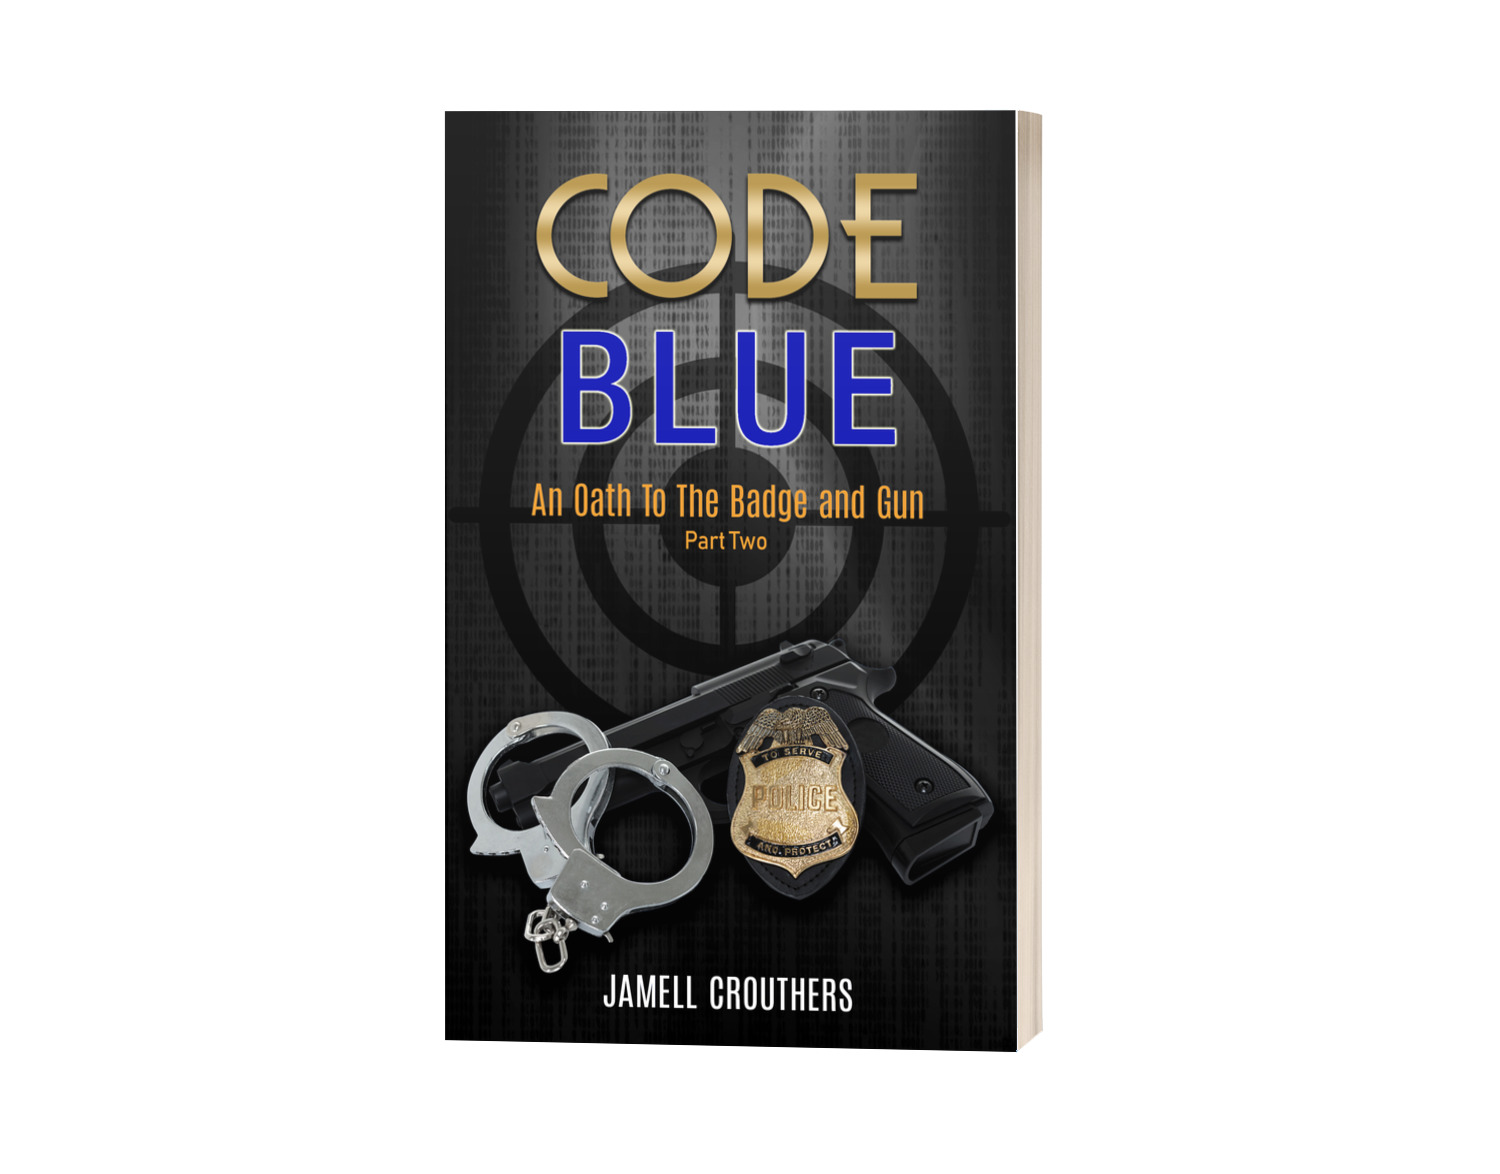 Writing "Code Blue Part 2"